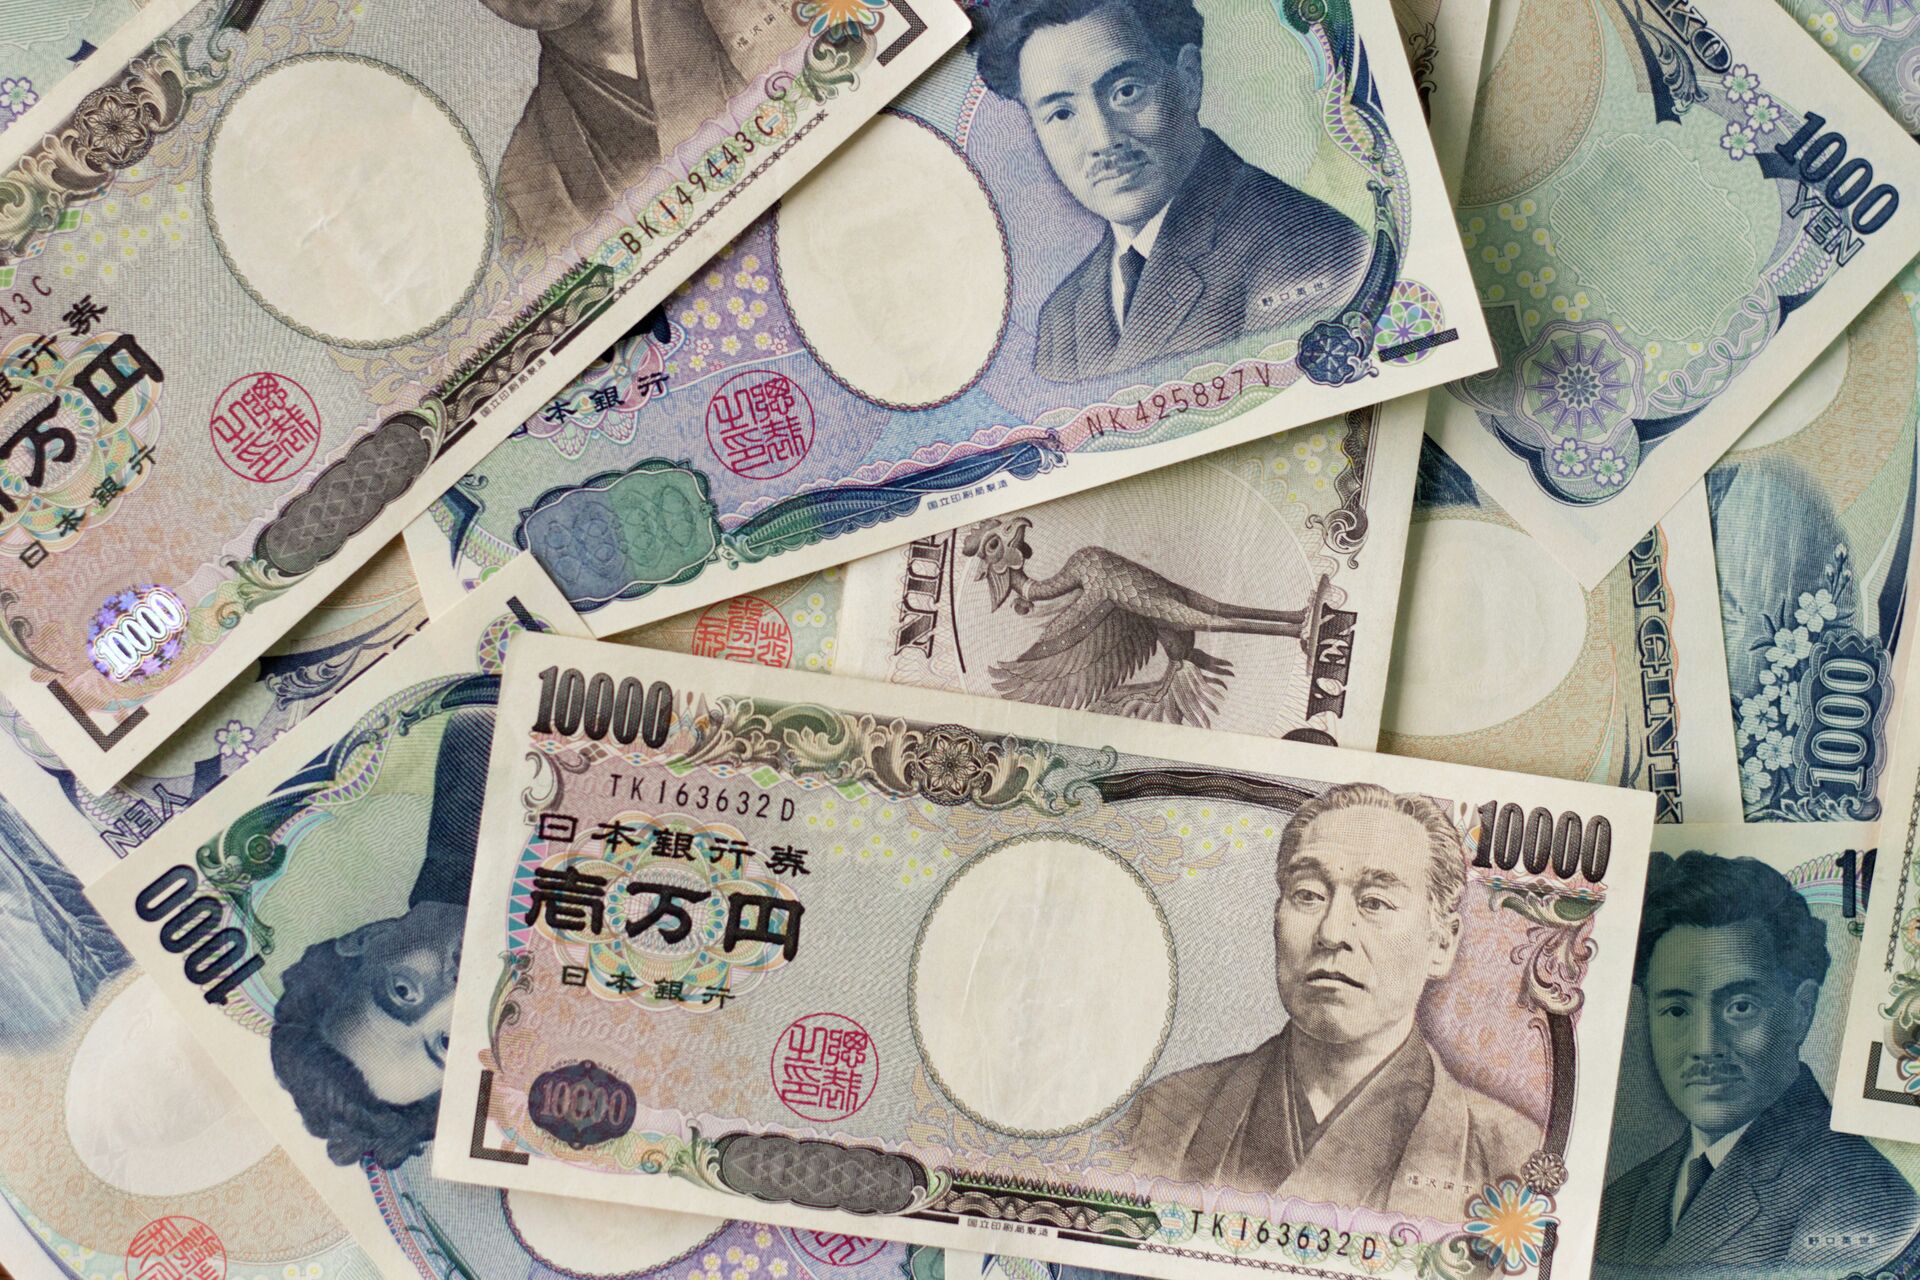 1000 yen bills and 10,000 yen bills spread out on a table. - Sputnik International, 1920, 21.10.2022